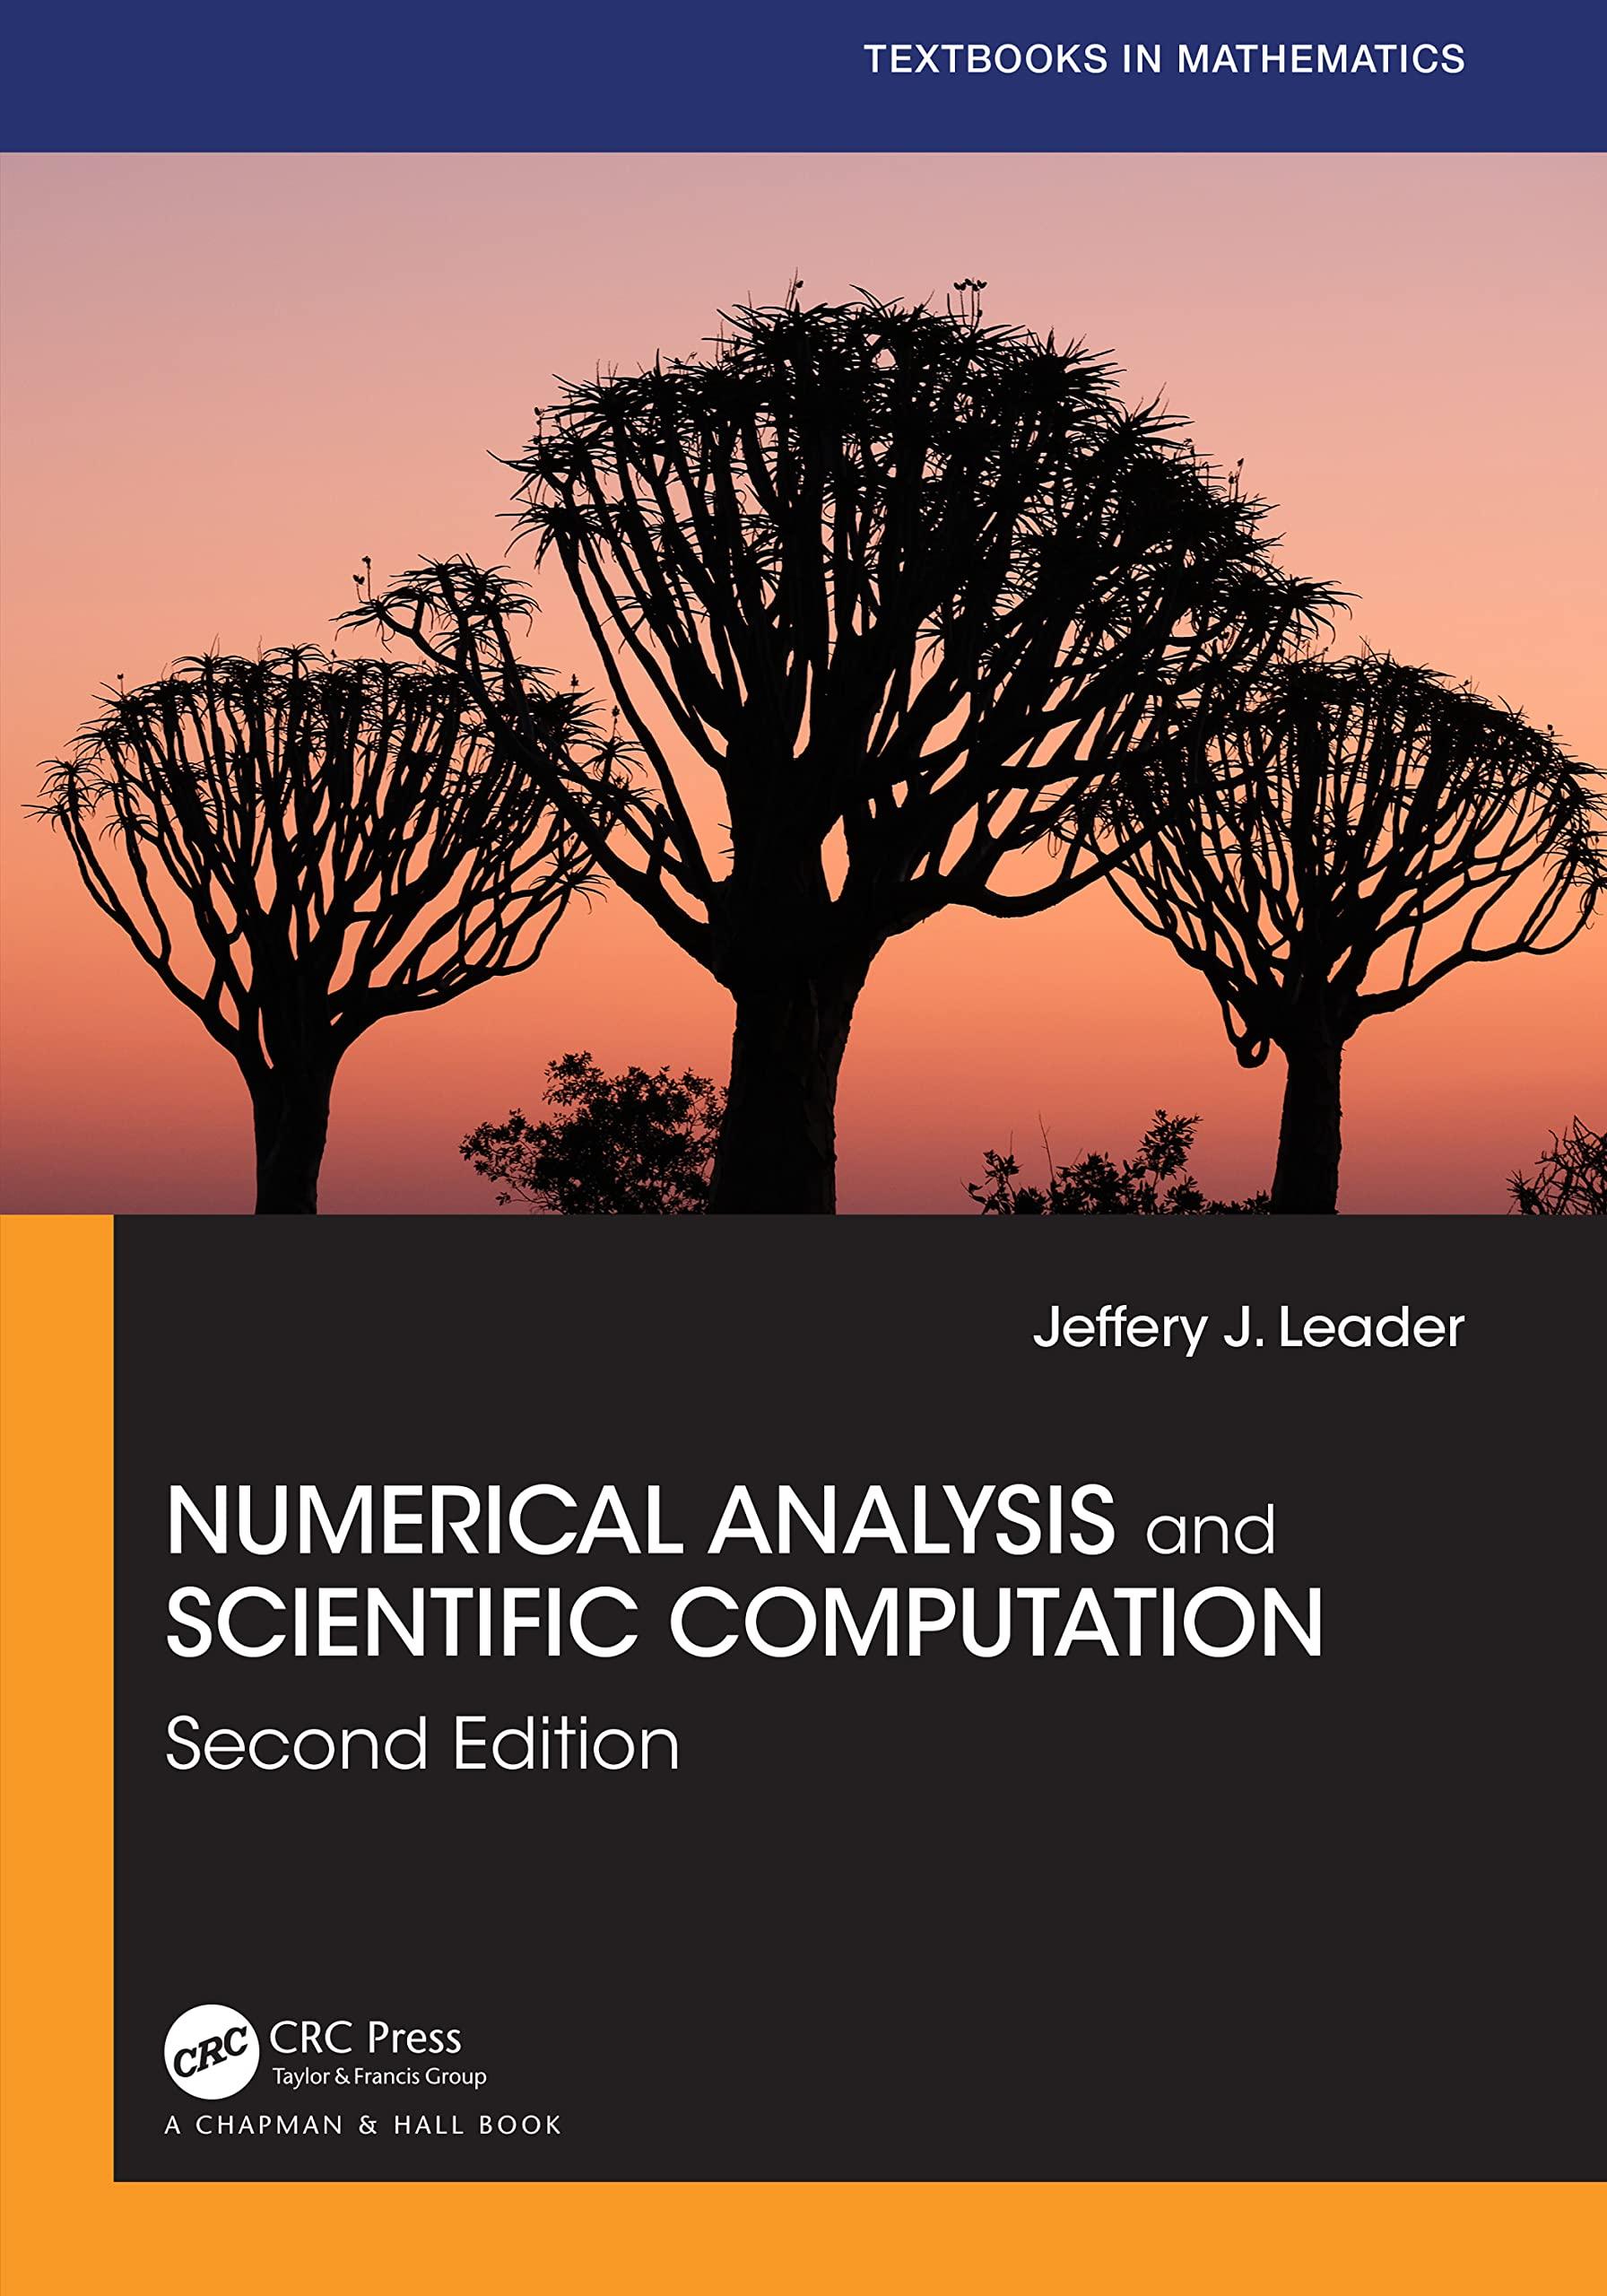 numerical analysis and scientific computation 2nd edition jeffery j. leader 0367486865, 9780367486860